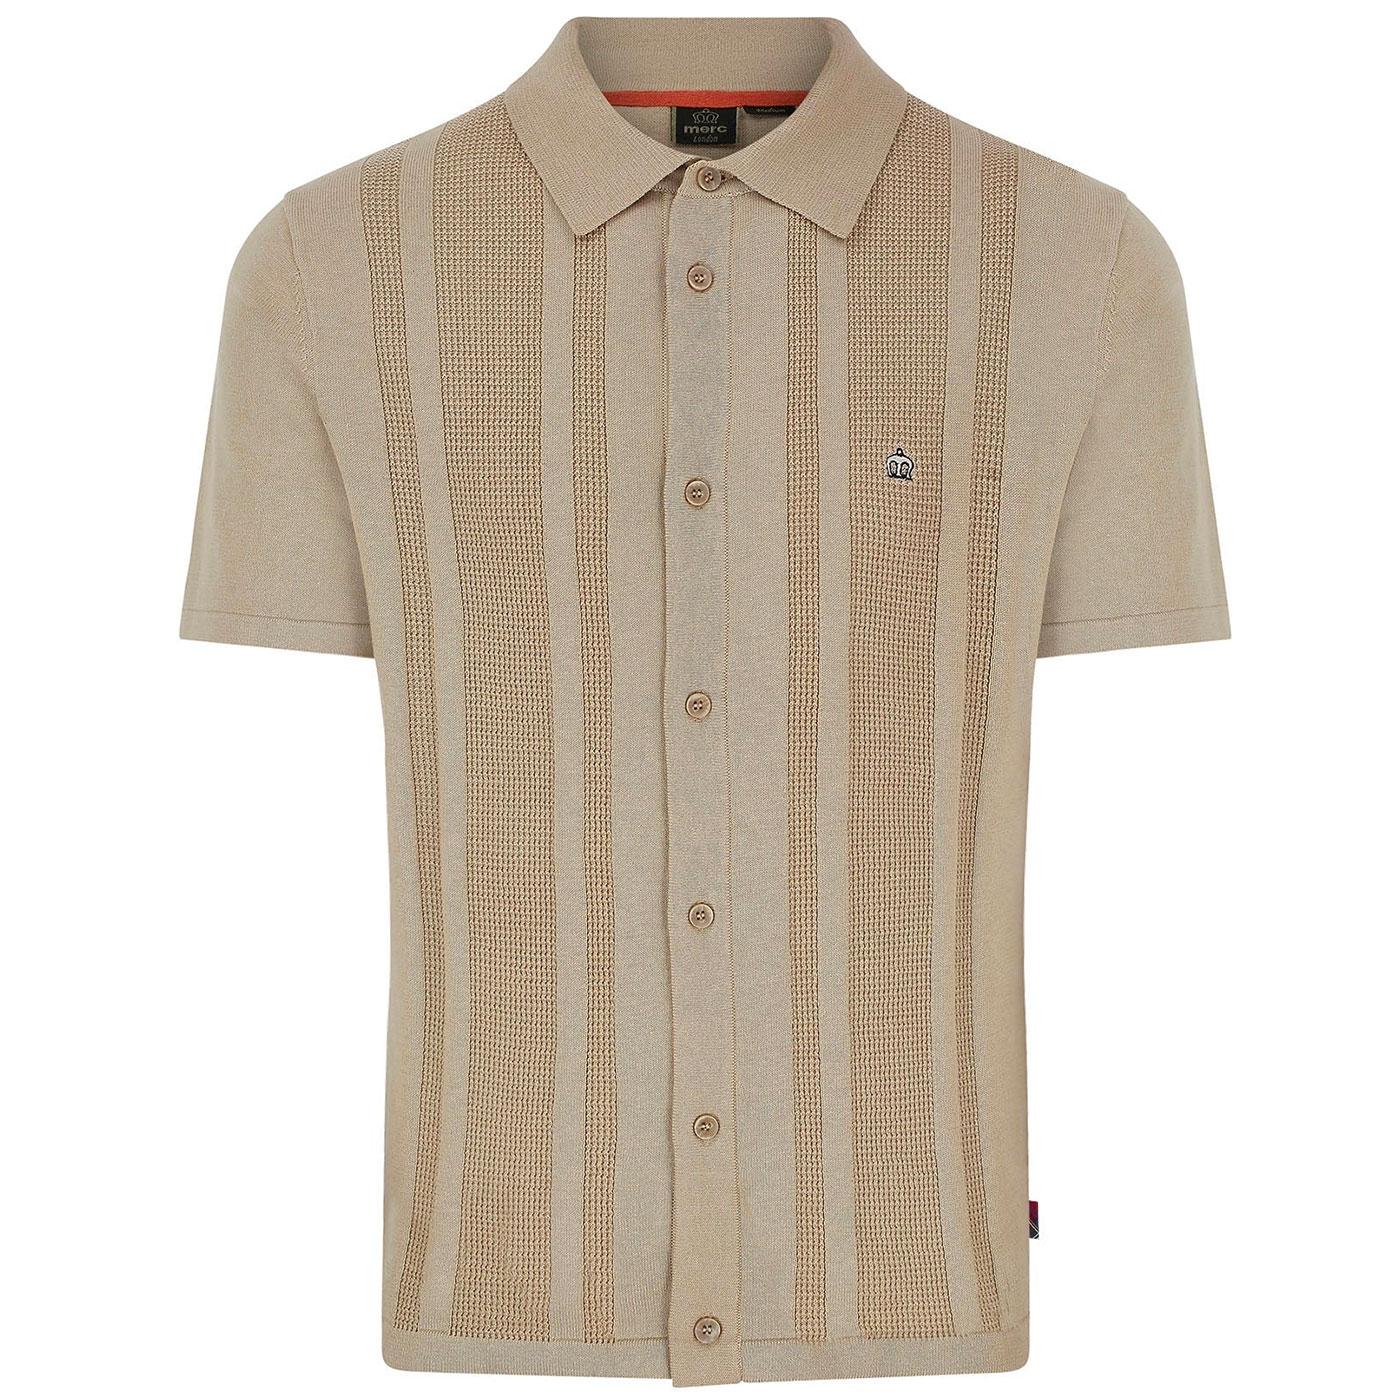 Elsted Merc Retro Textured Stripe Knit Shirt Beige